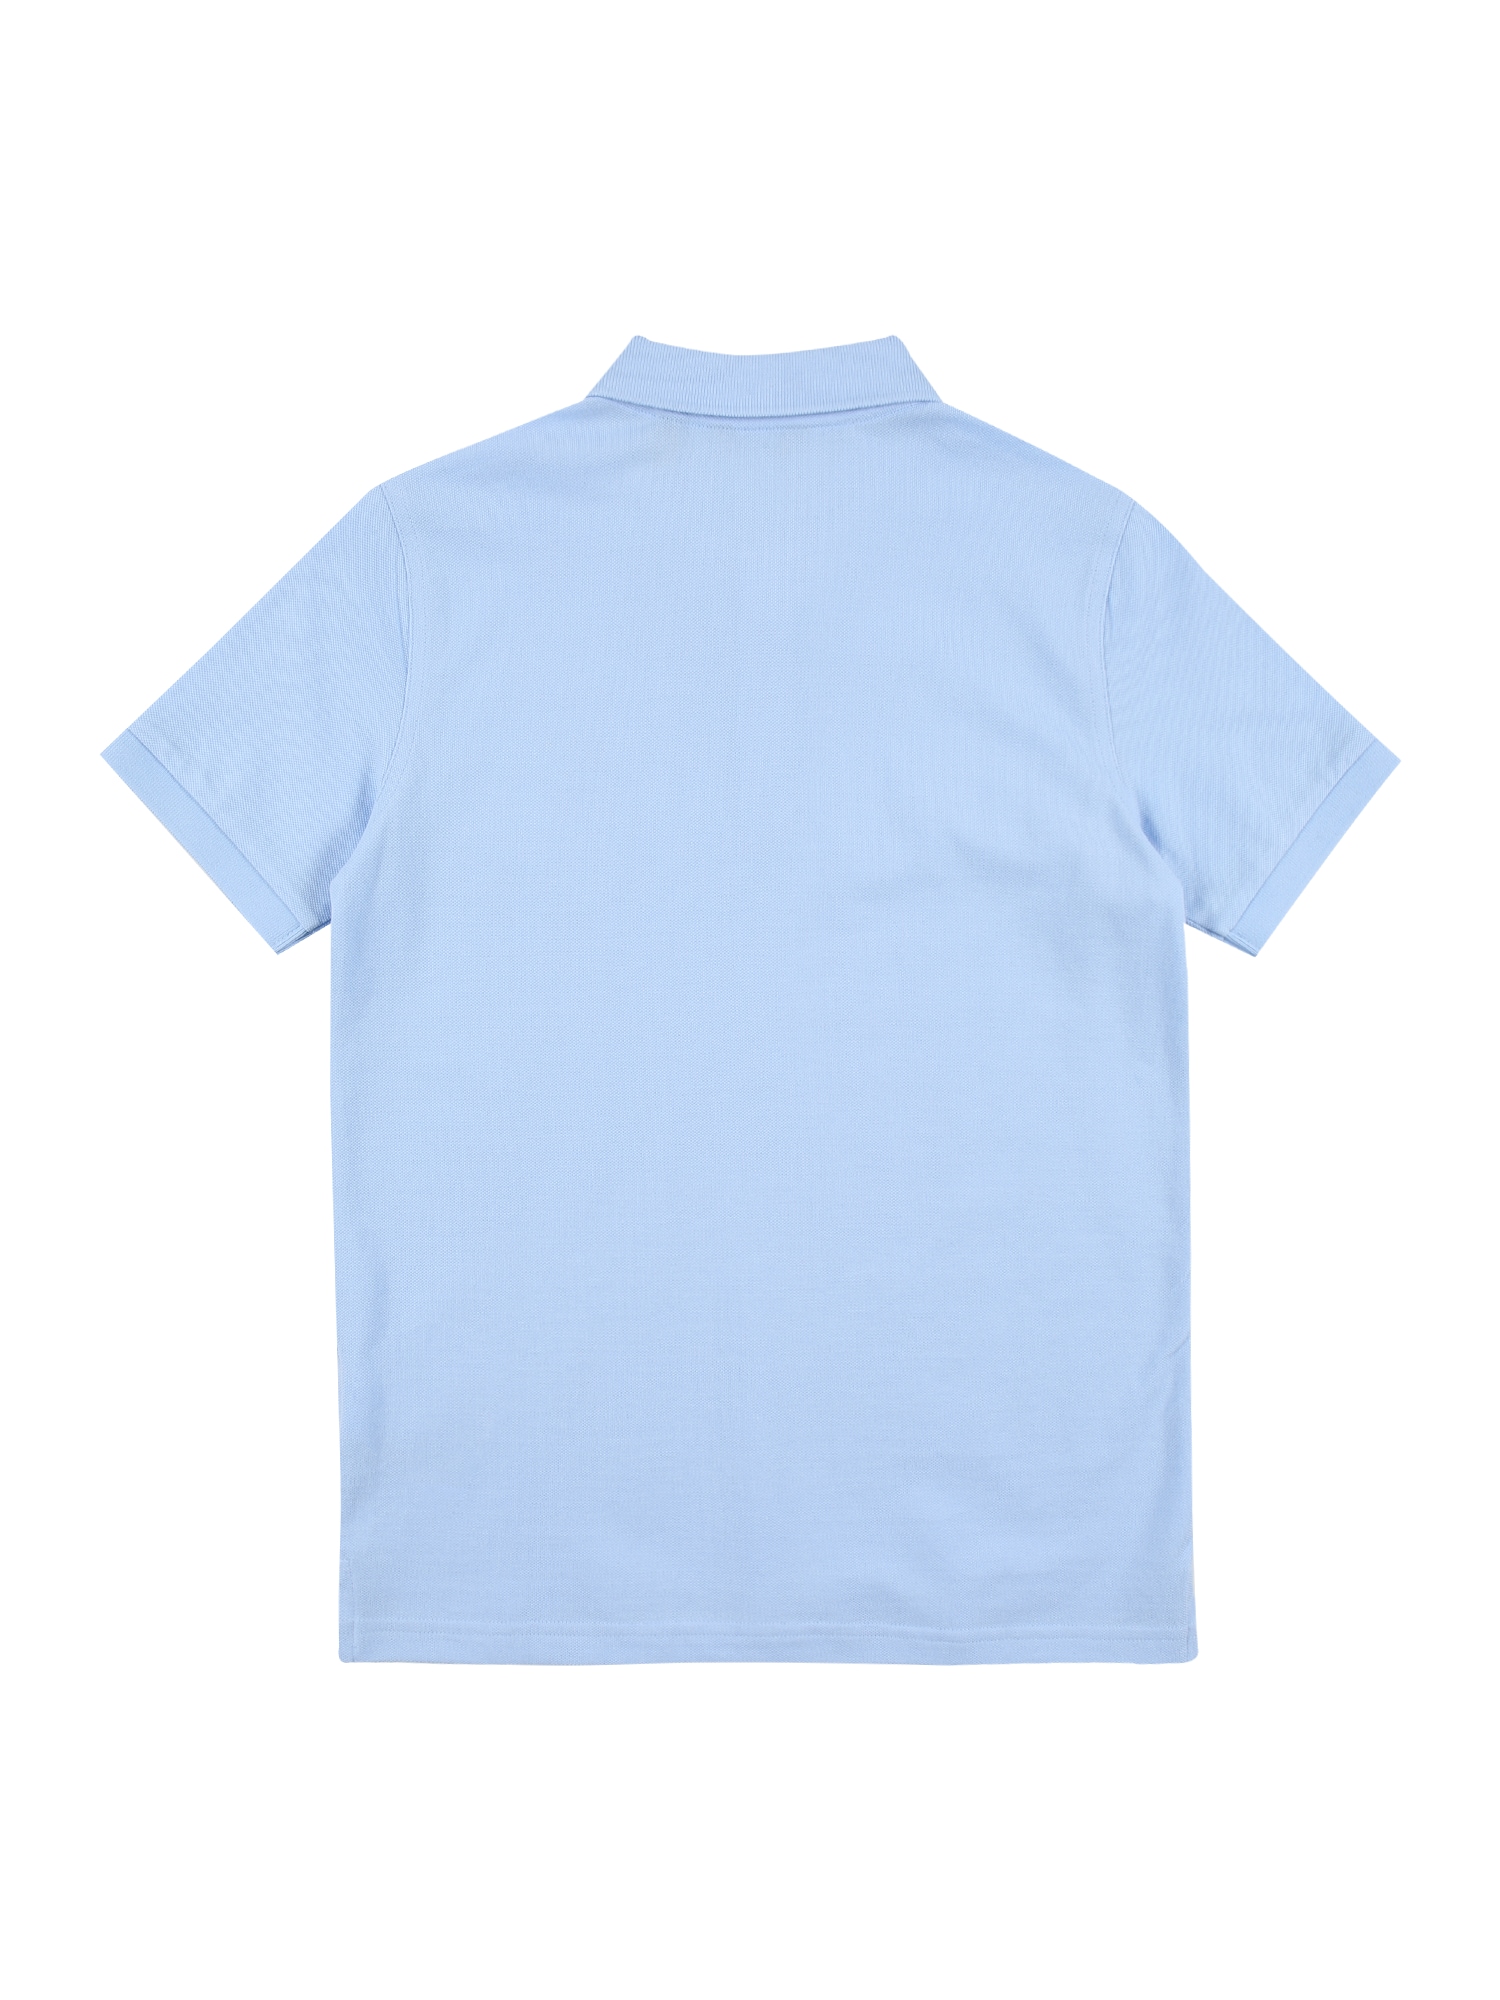 GANT Shirt  light blue / grey / navy / red